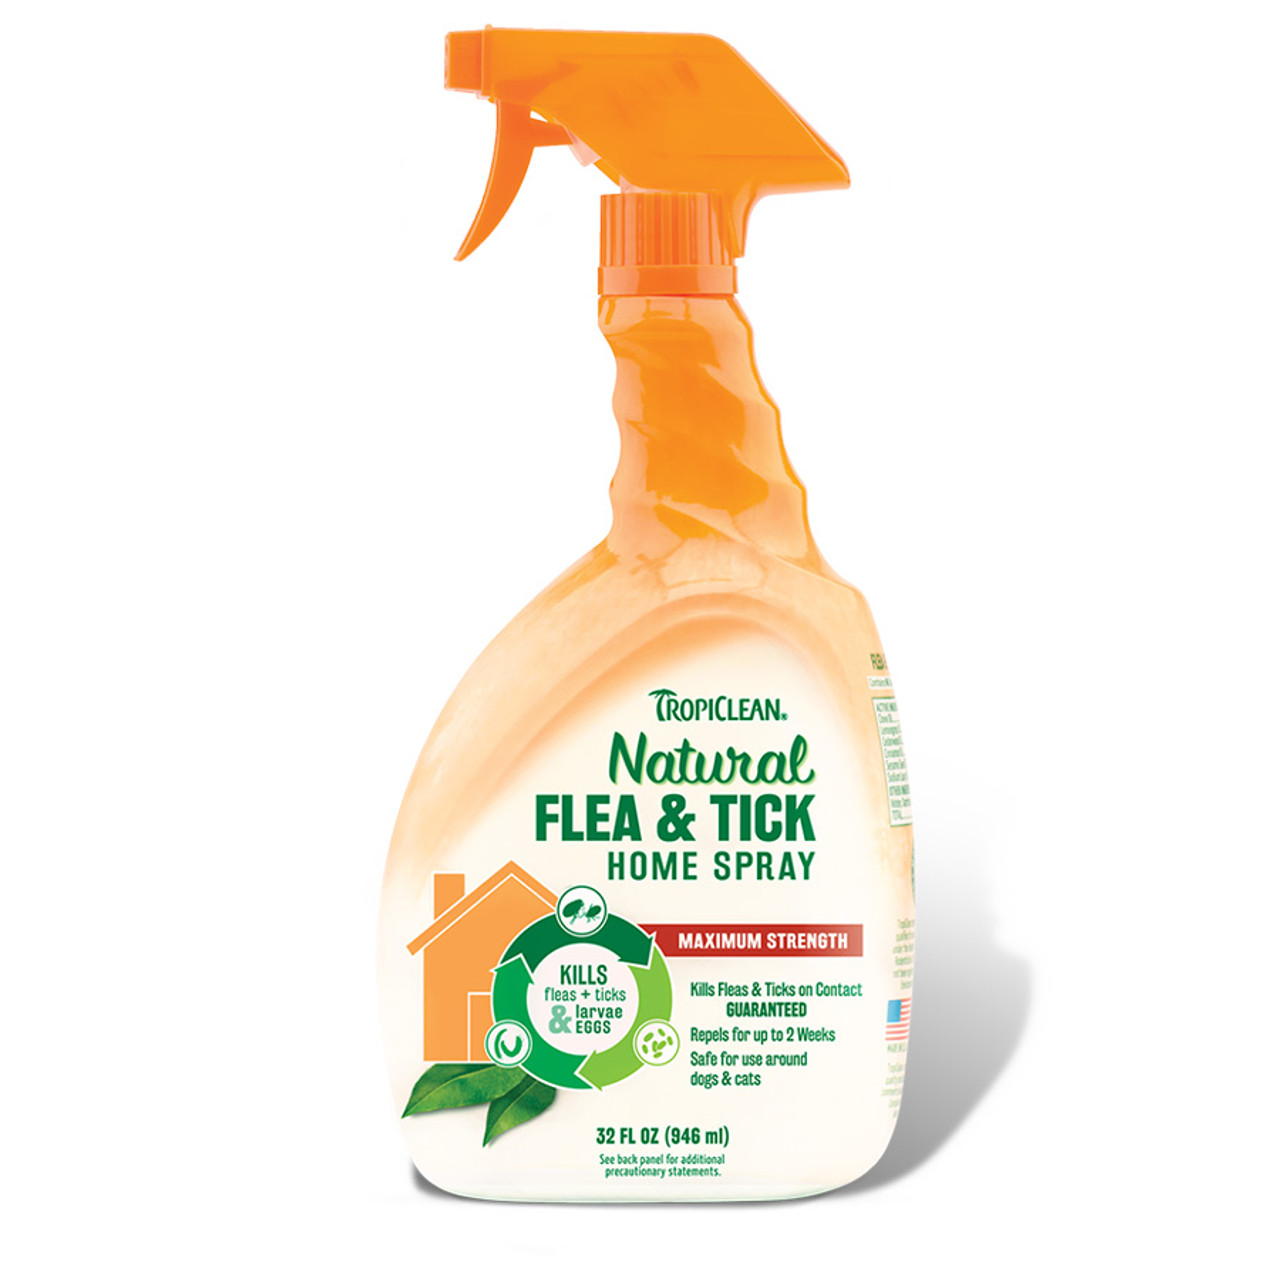 Tropiclean Flea and Tick home spray